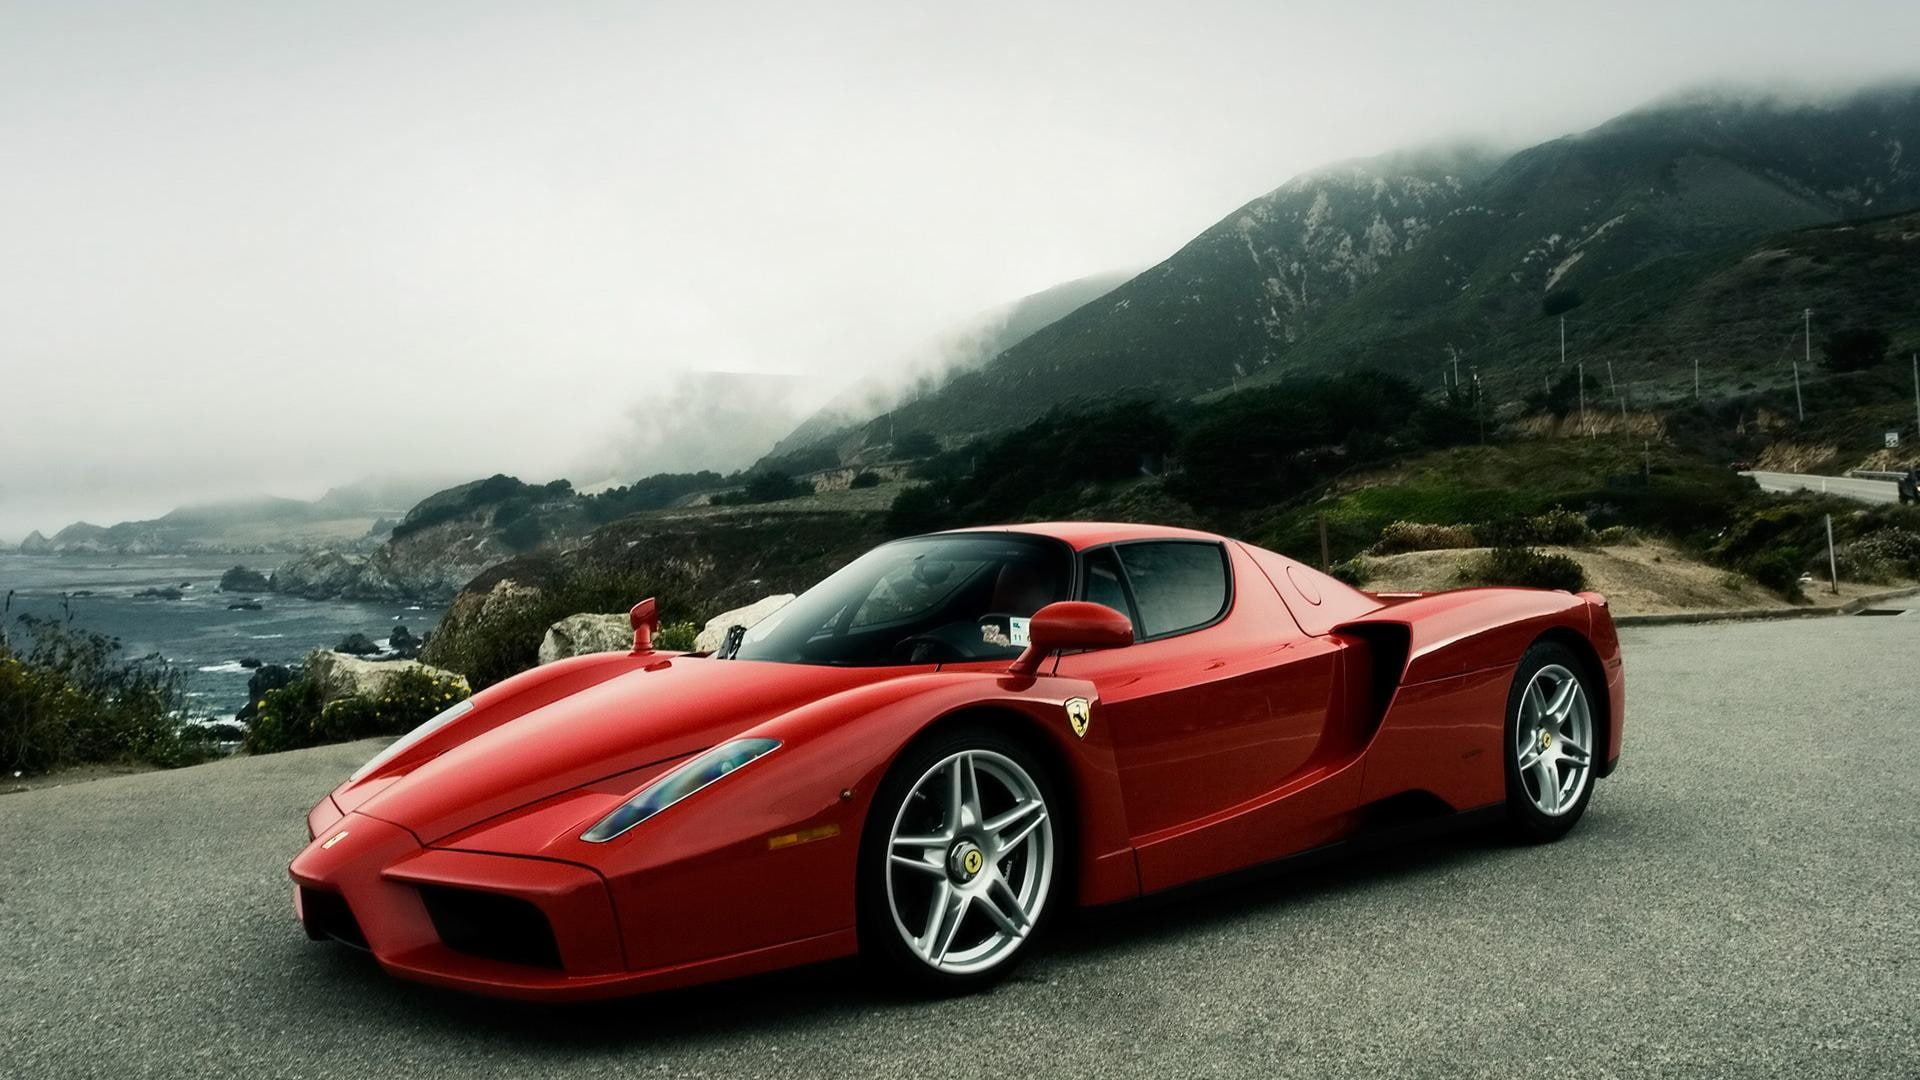 car, sports car, Ferrari, Ferrari Enzo, mountain, transportation